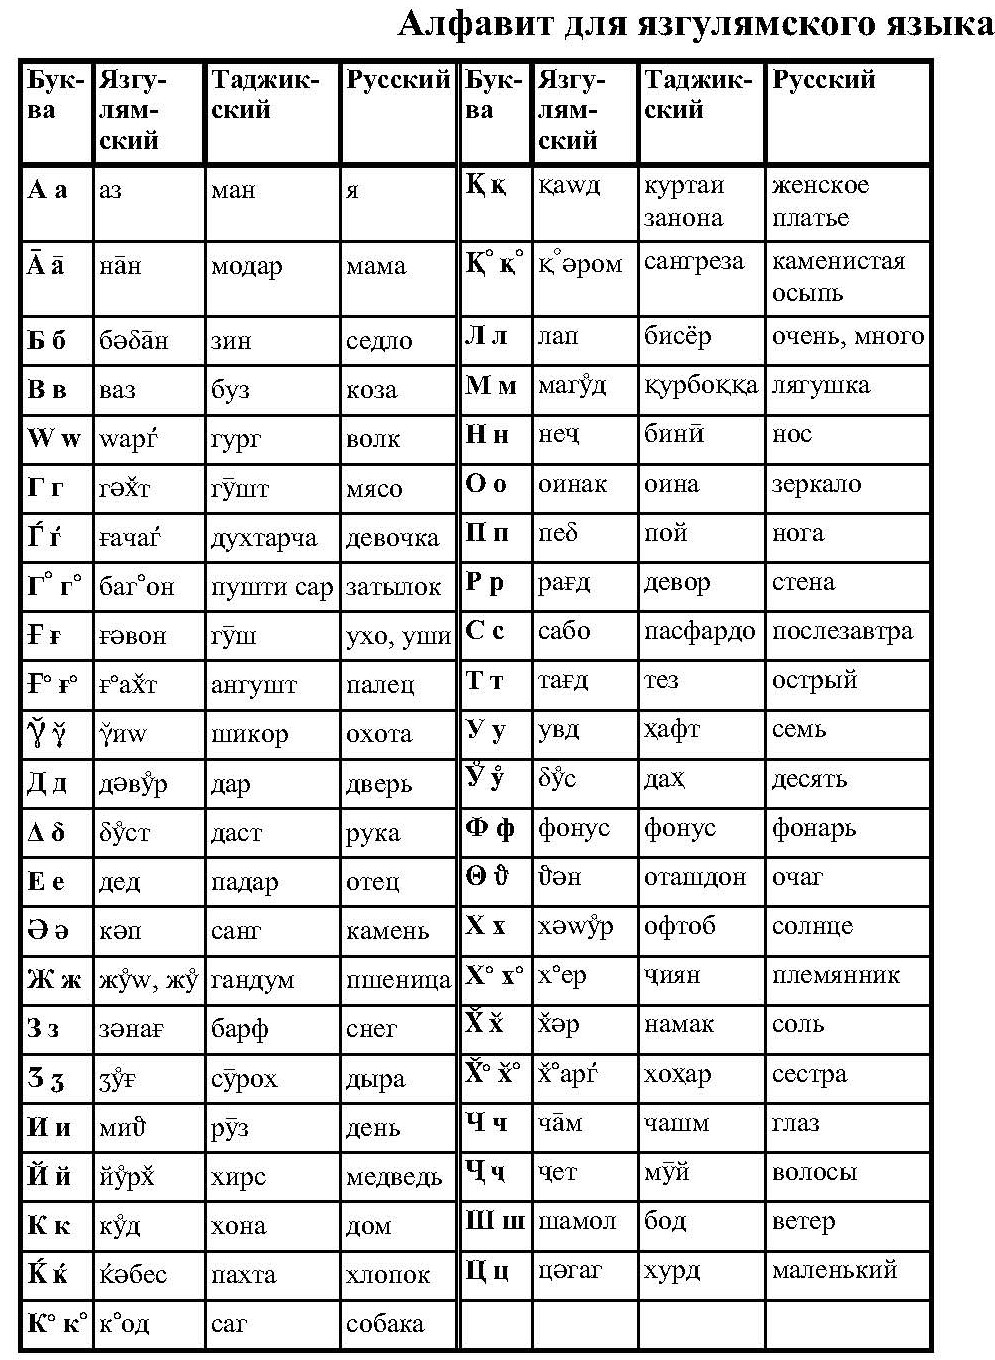 Alphabet with examples